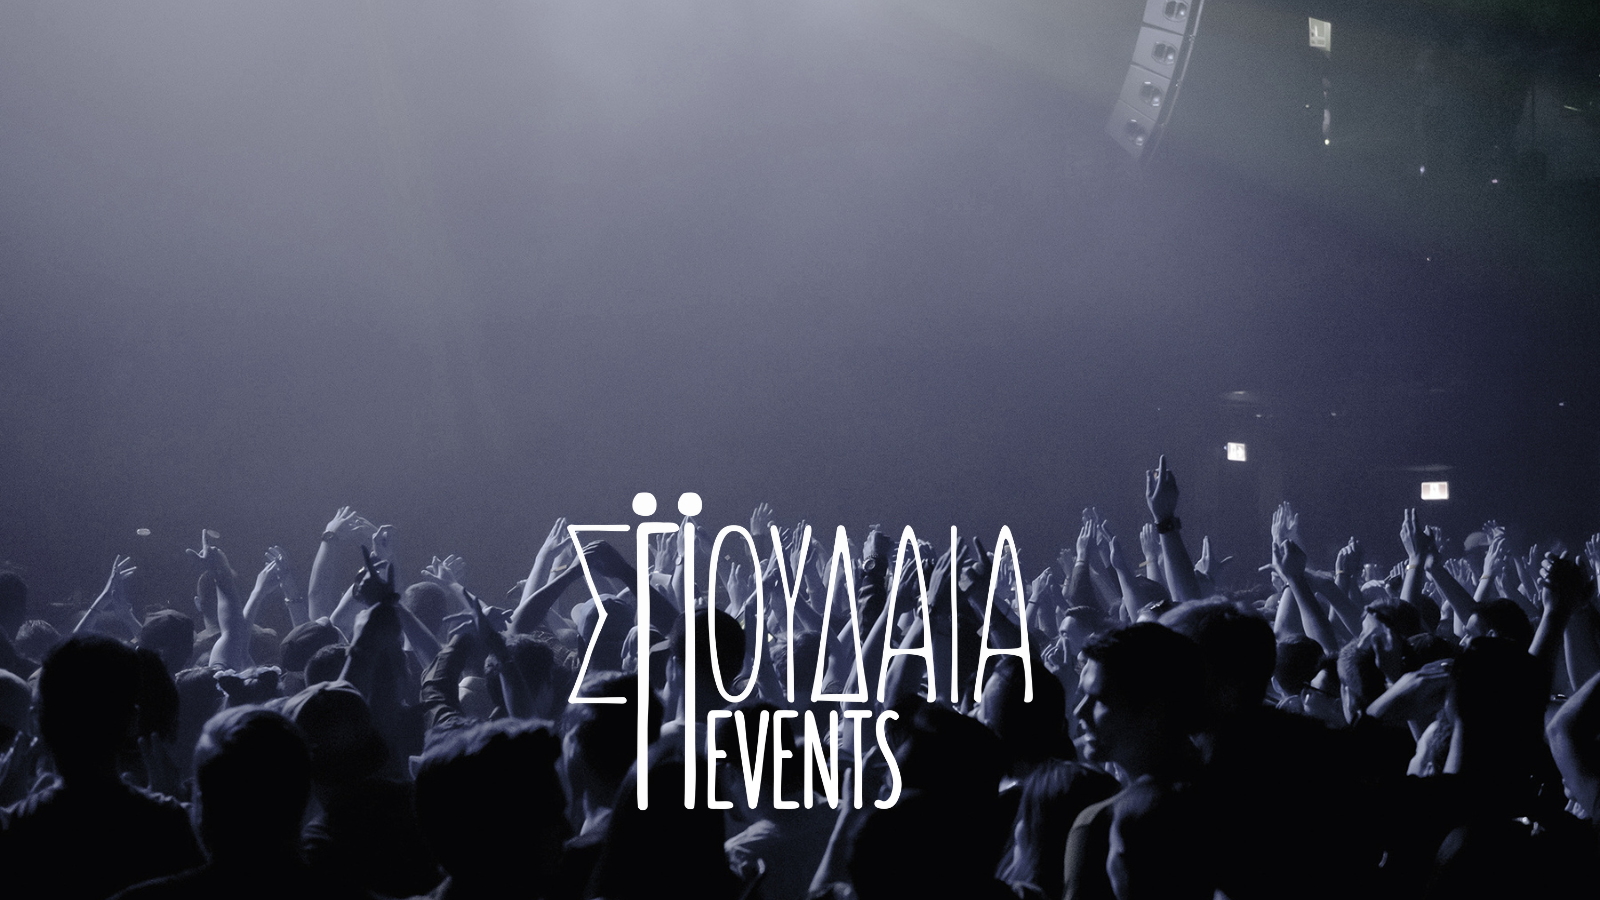 spoudaia-events-header